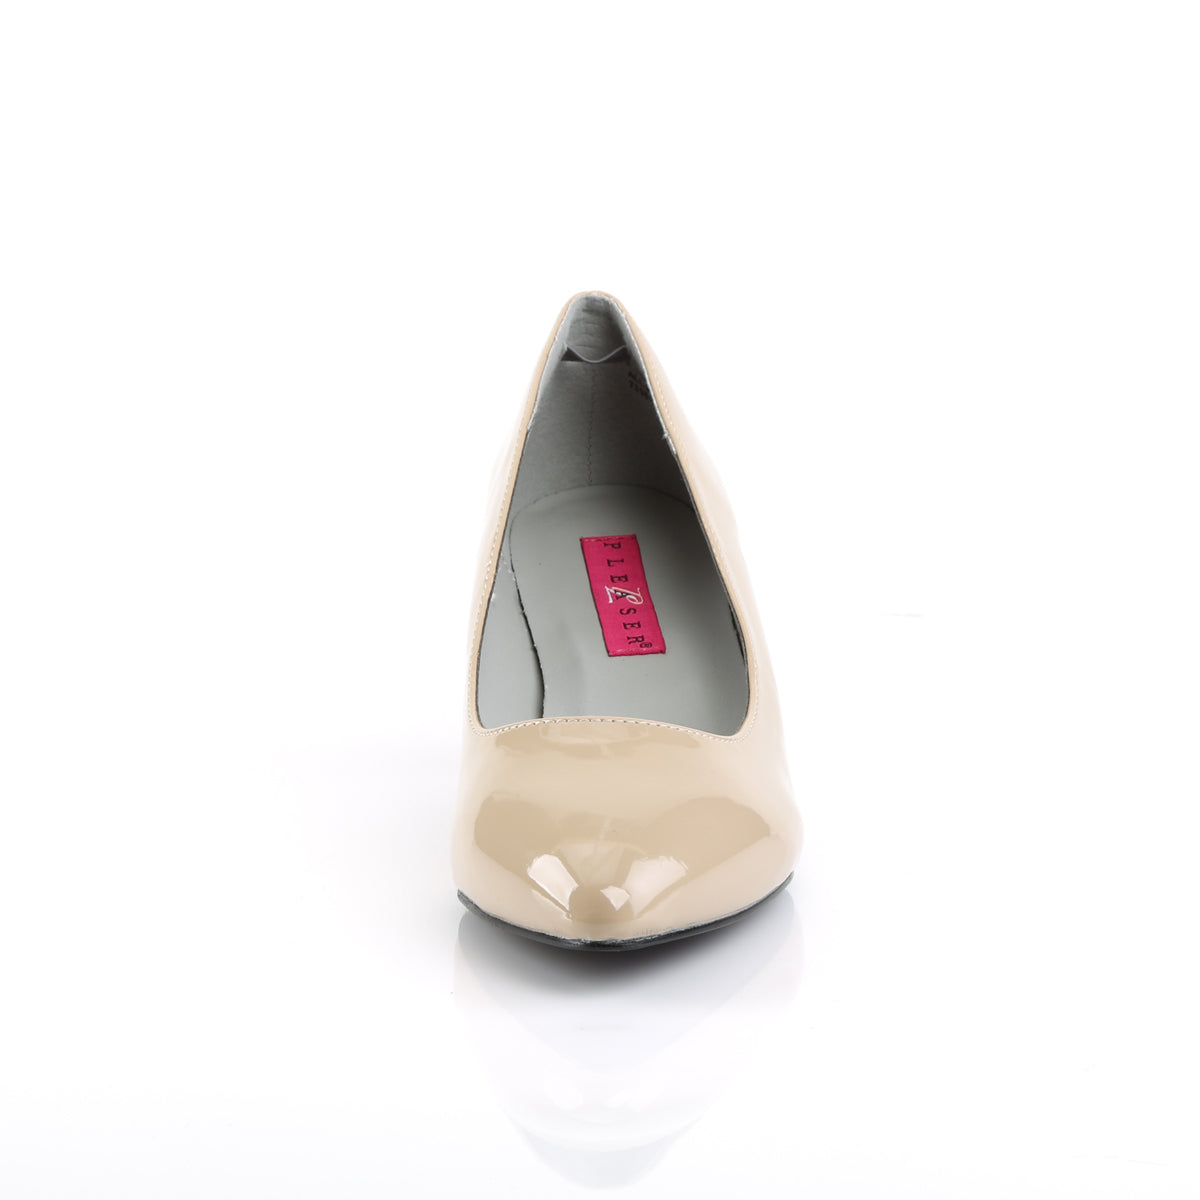 KITTEN-01 Large Size Ladies Shoes Pleaser Pink Label Single Soles Cream Pat